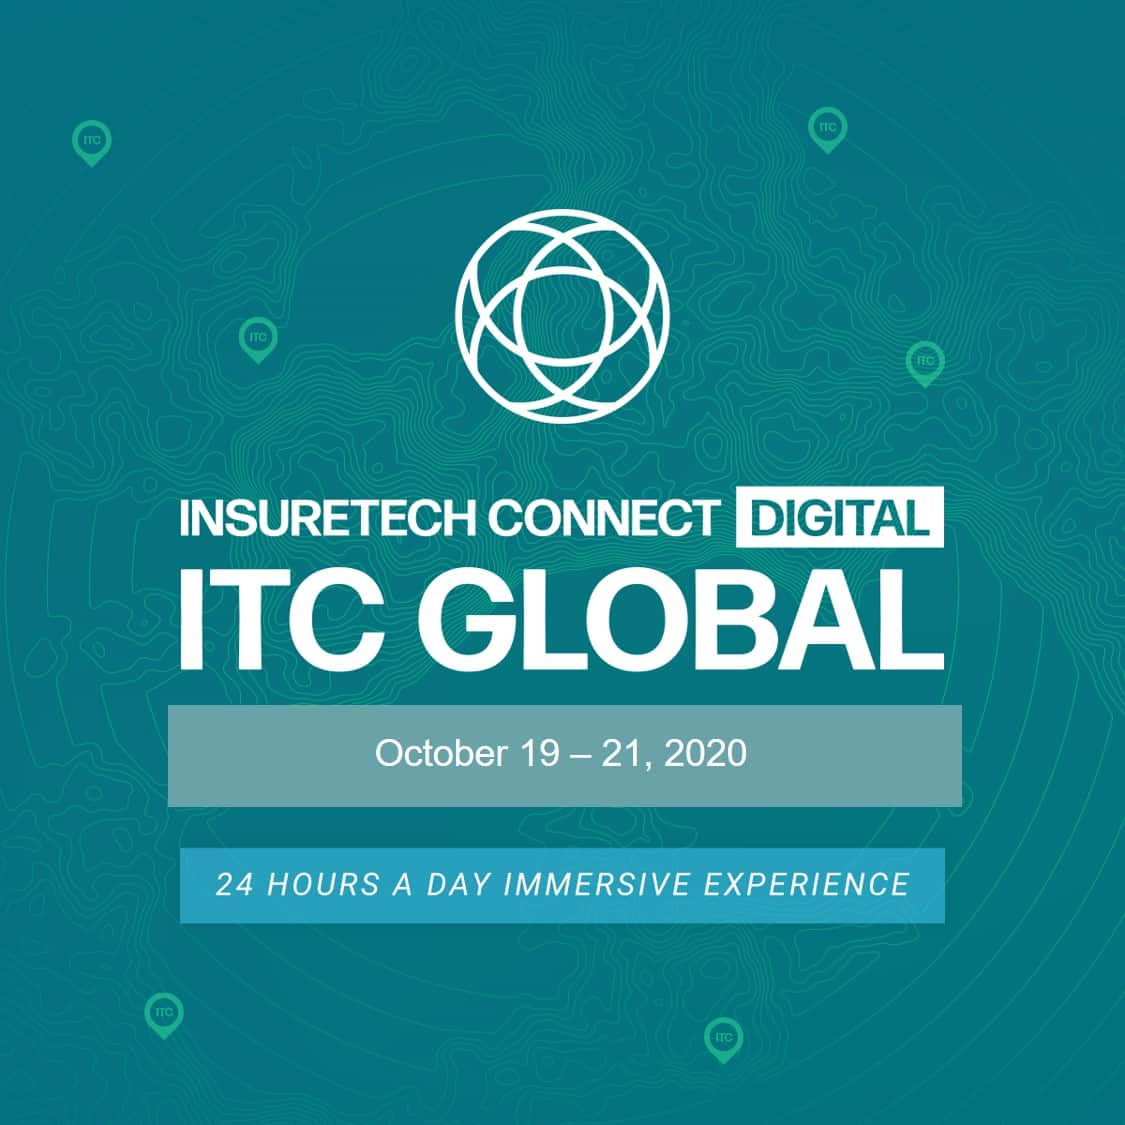 FINEOS At InsureTech Connect Digital ITC Global Digital 2020